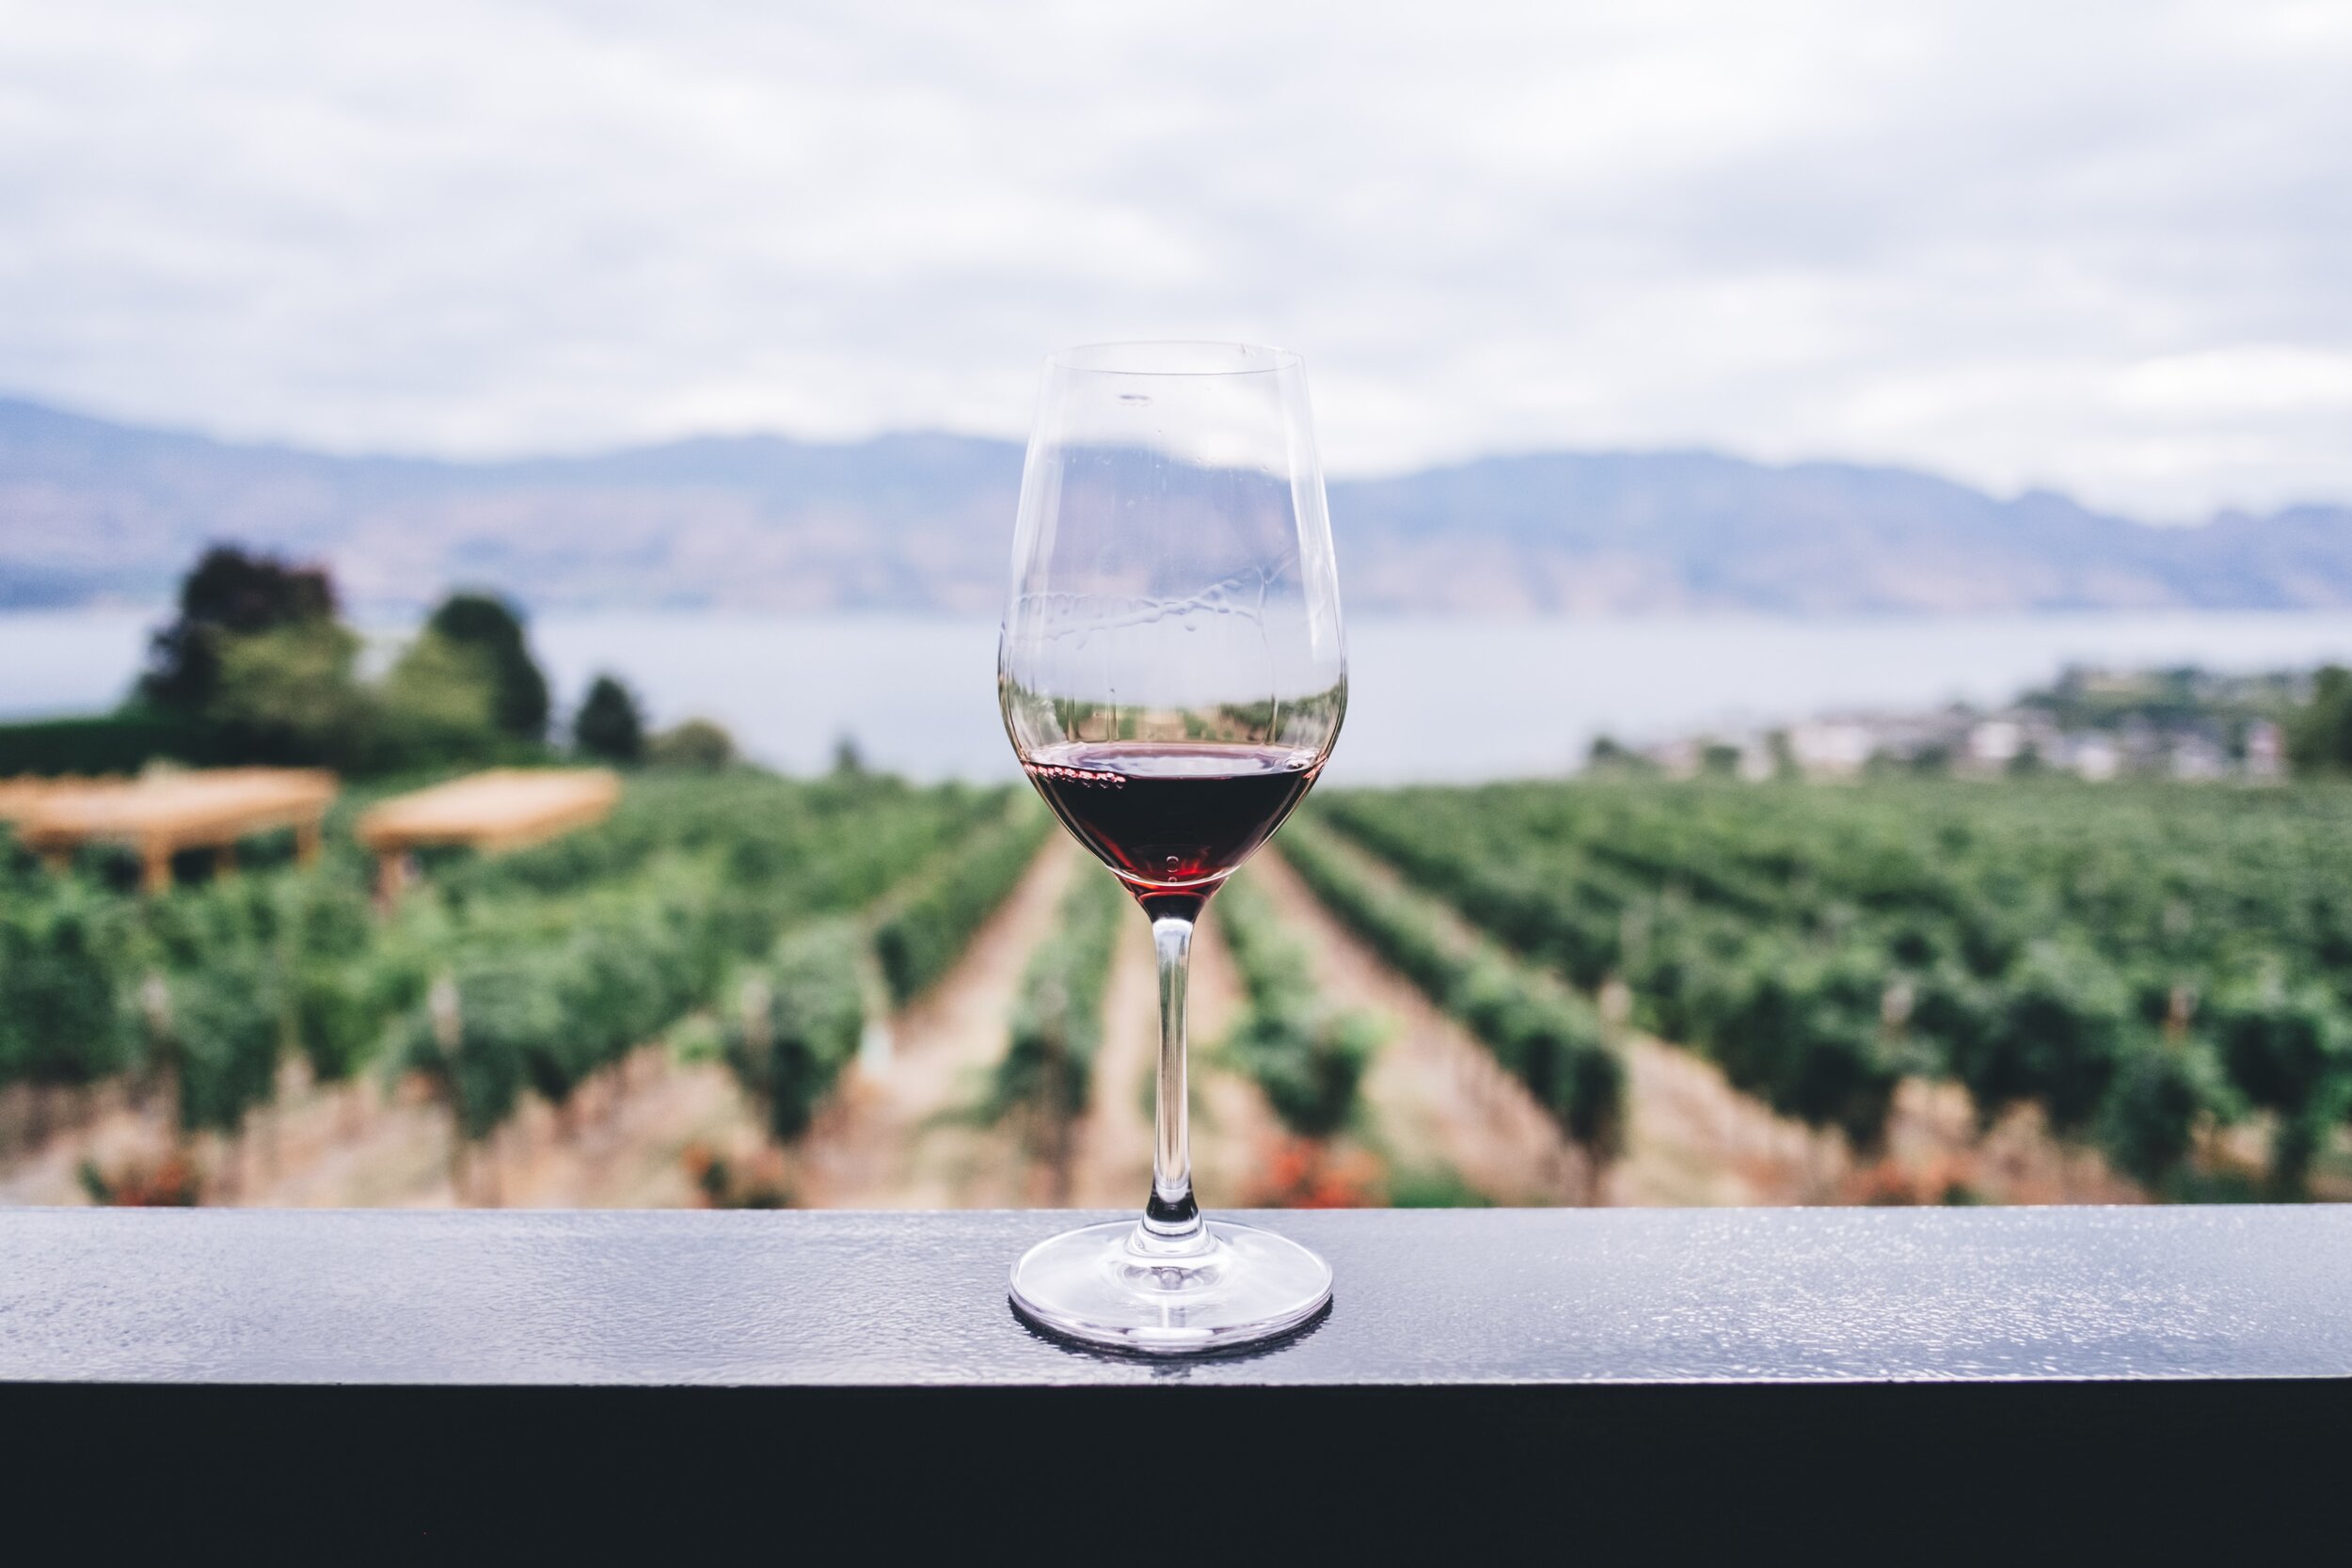 website-stockimage-red-wine-glass-vineyard.jpg